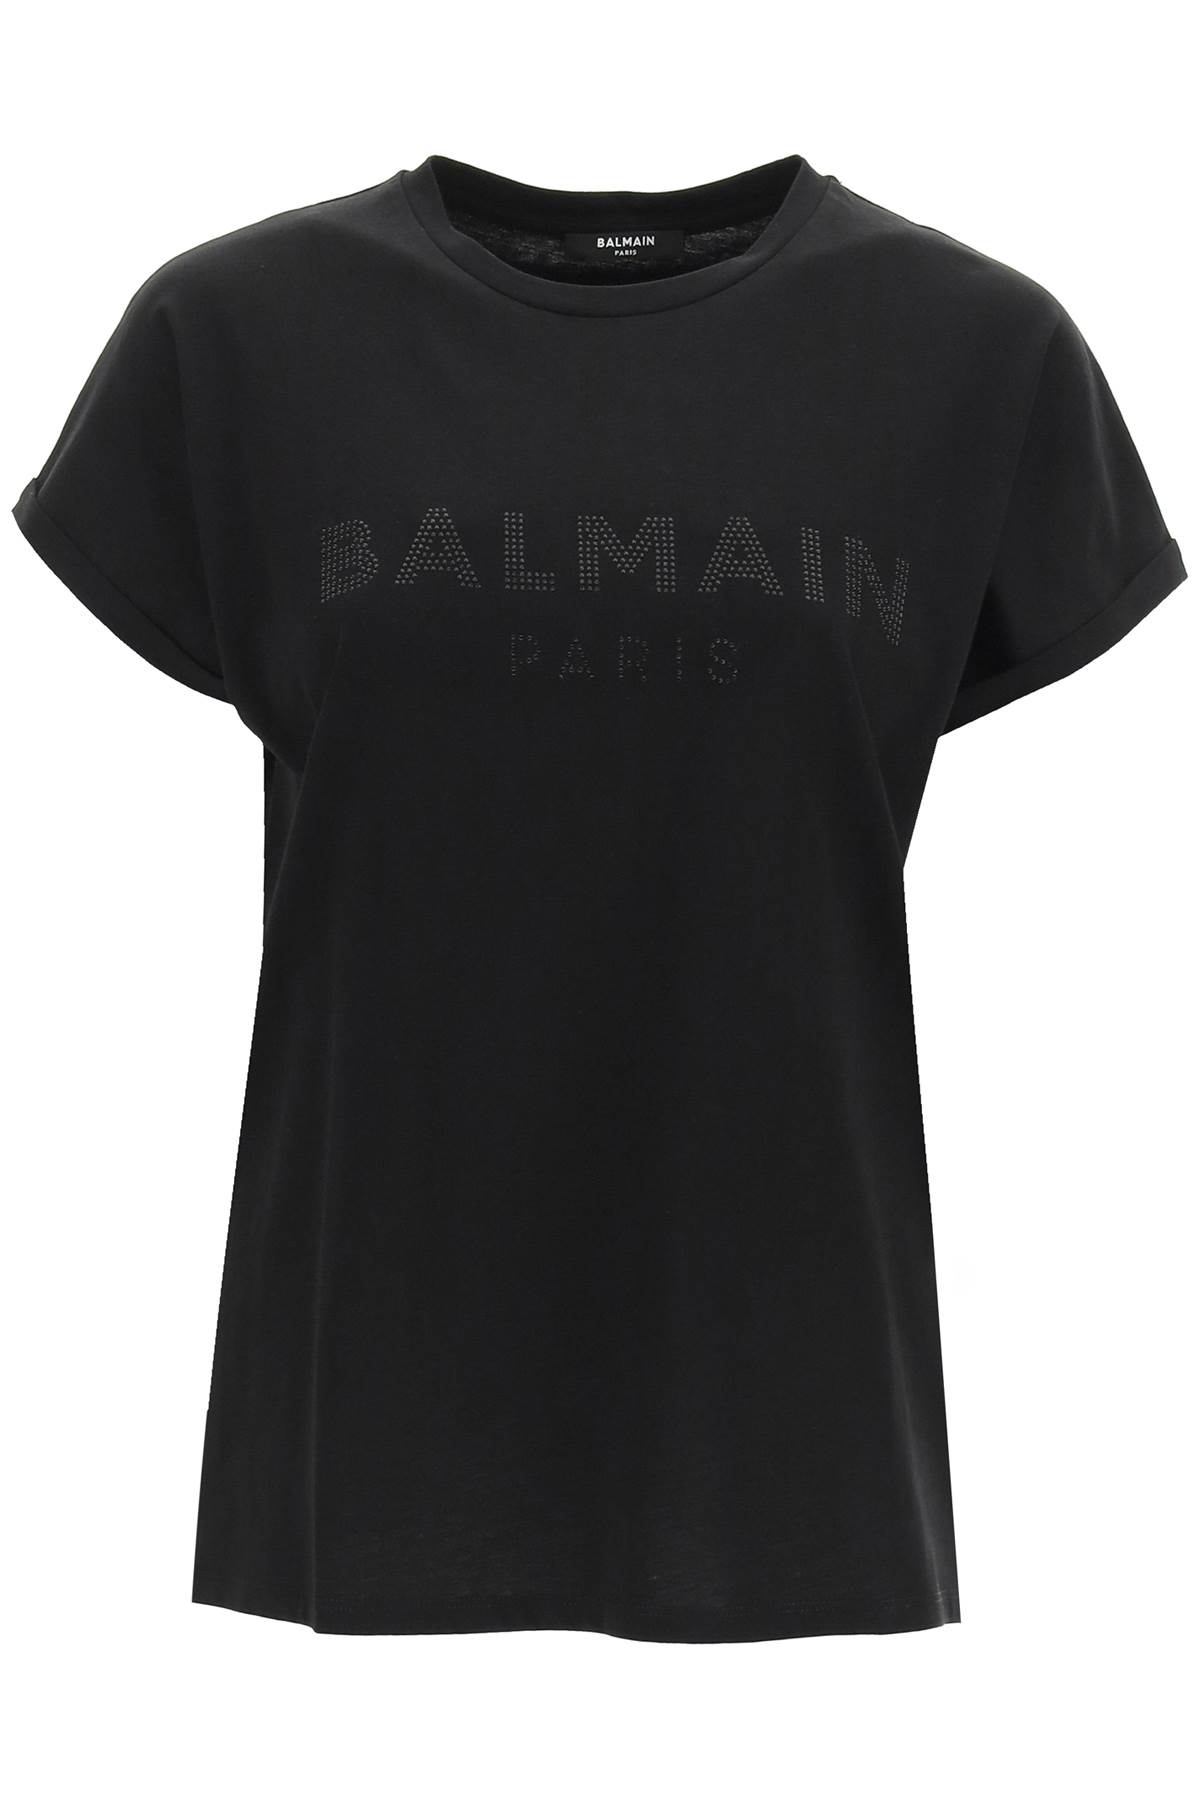 Balmain Crystal Logo T-shirt